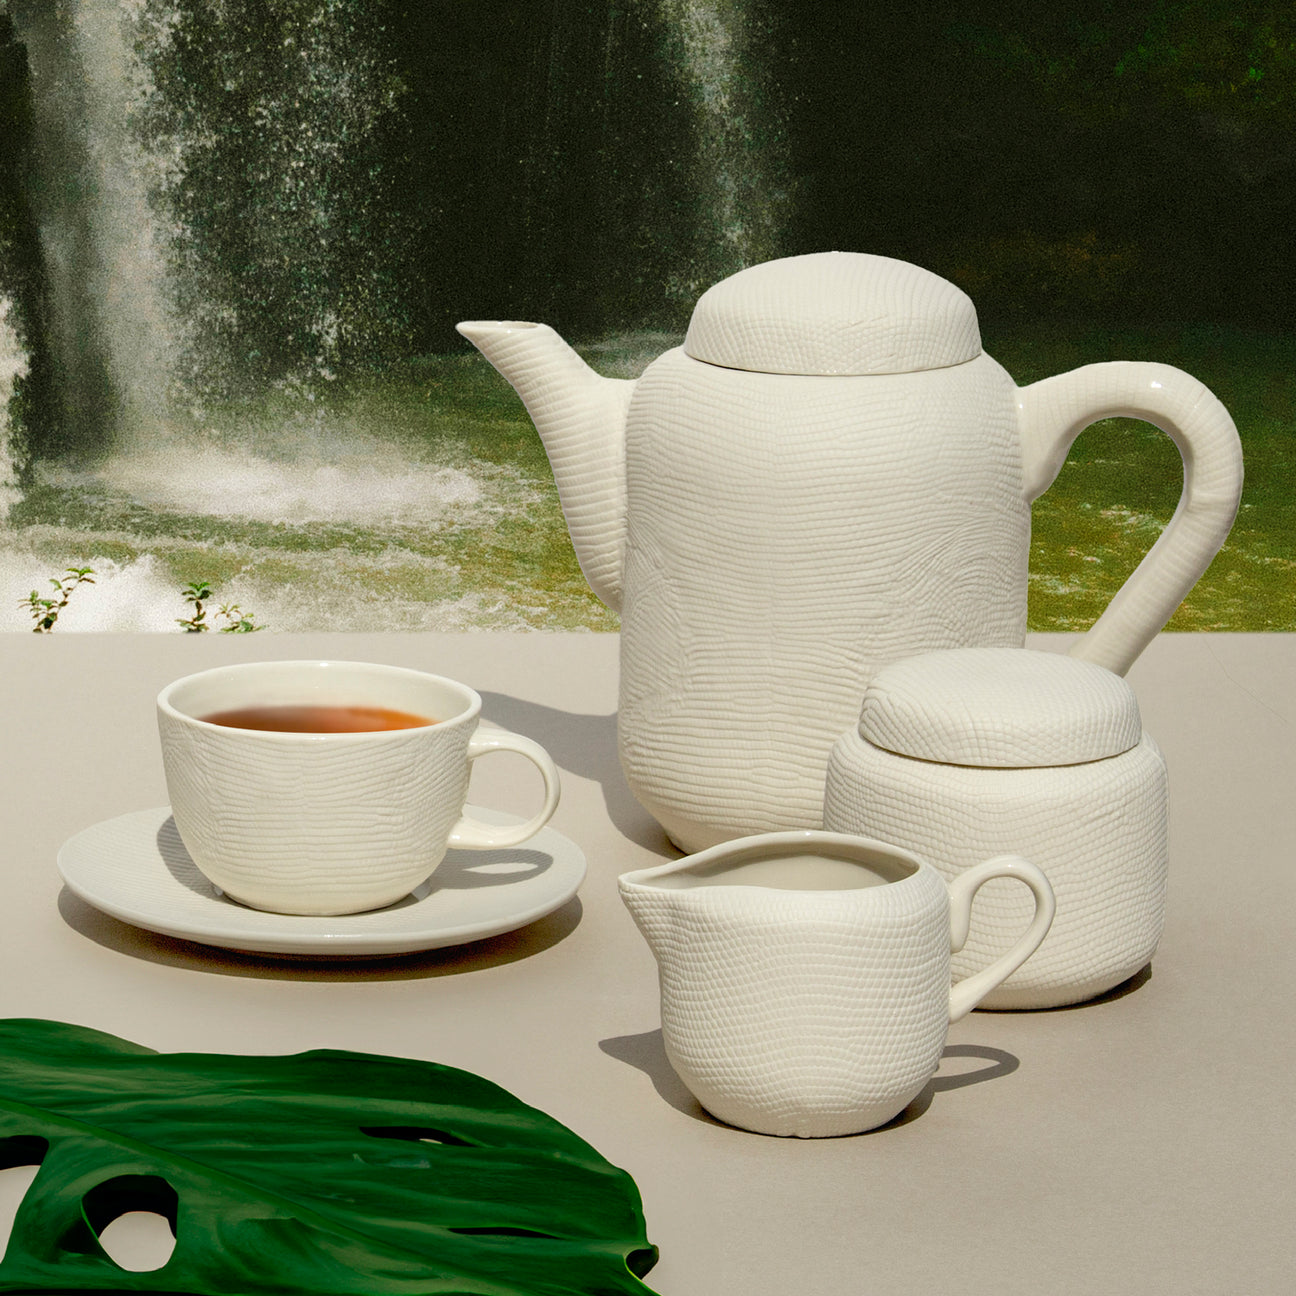 Dining & Tea Time \ Tea & Coffee Time \ Compose your own set \ Tea Sets